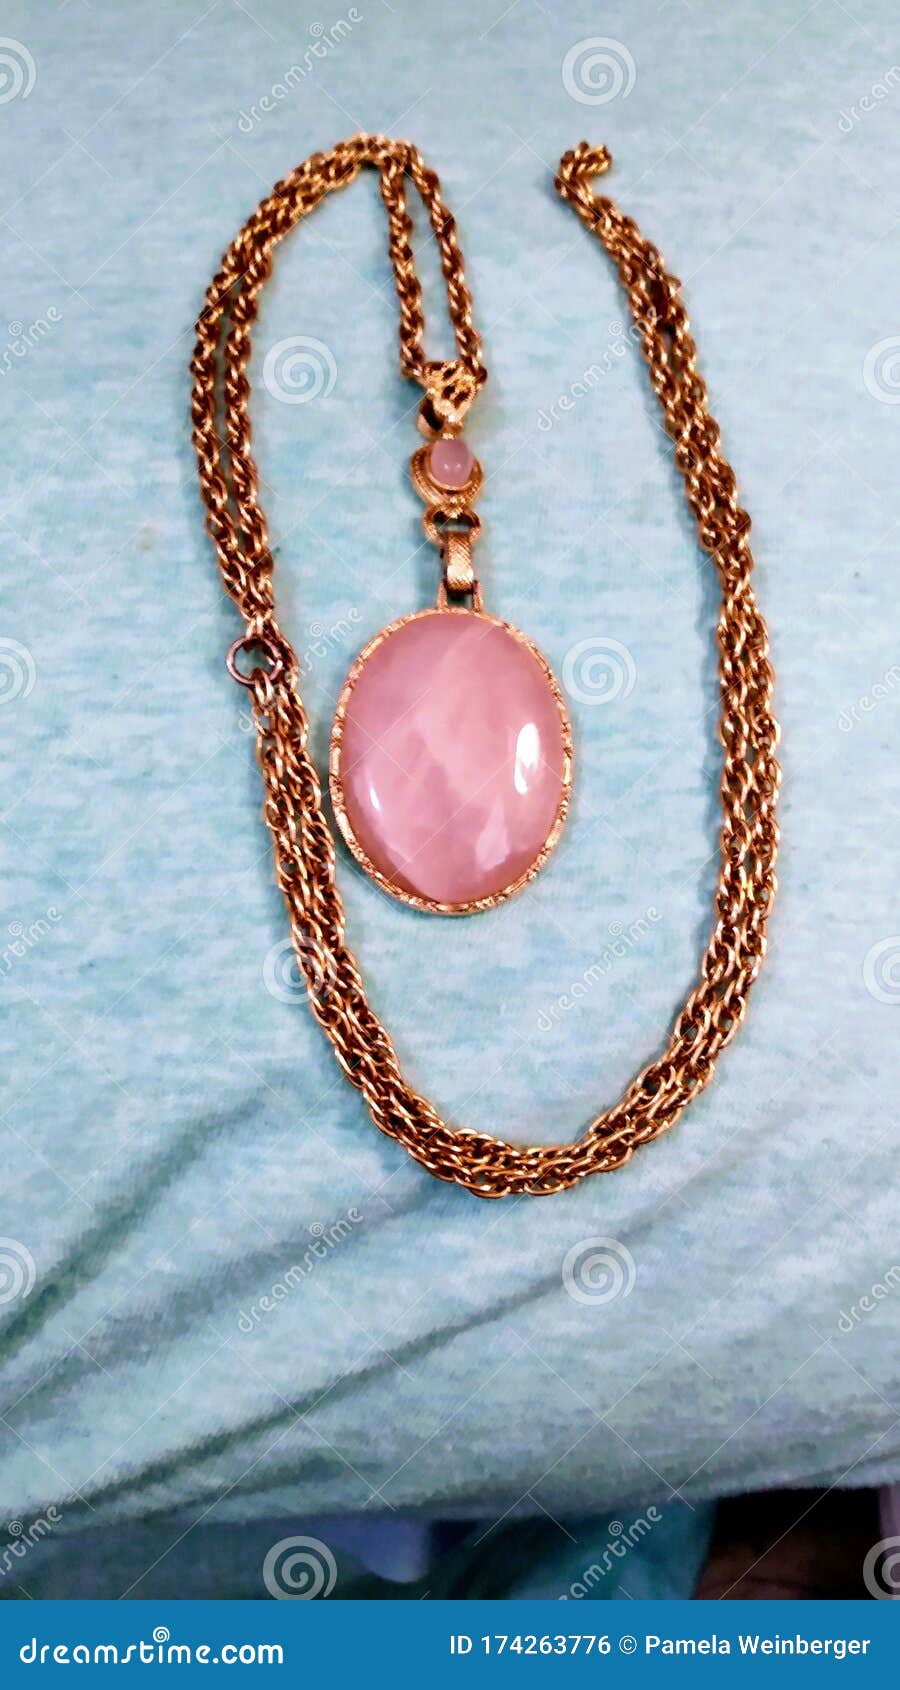 Vintage polished Rose Quartz necklace with pendant.